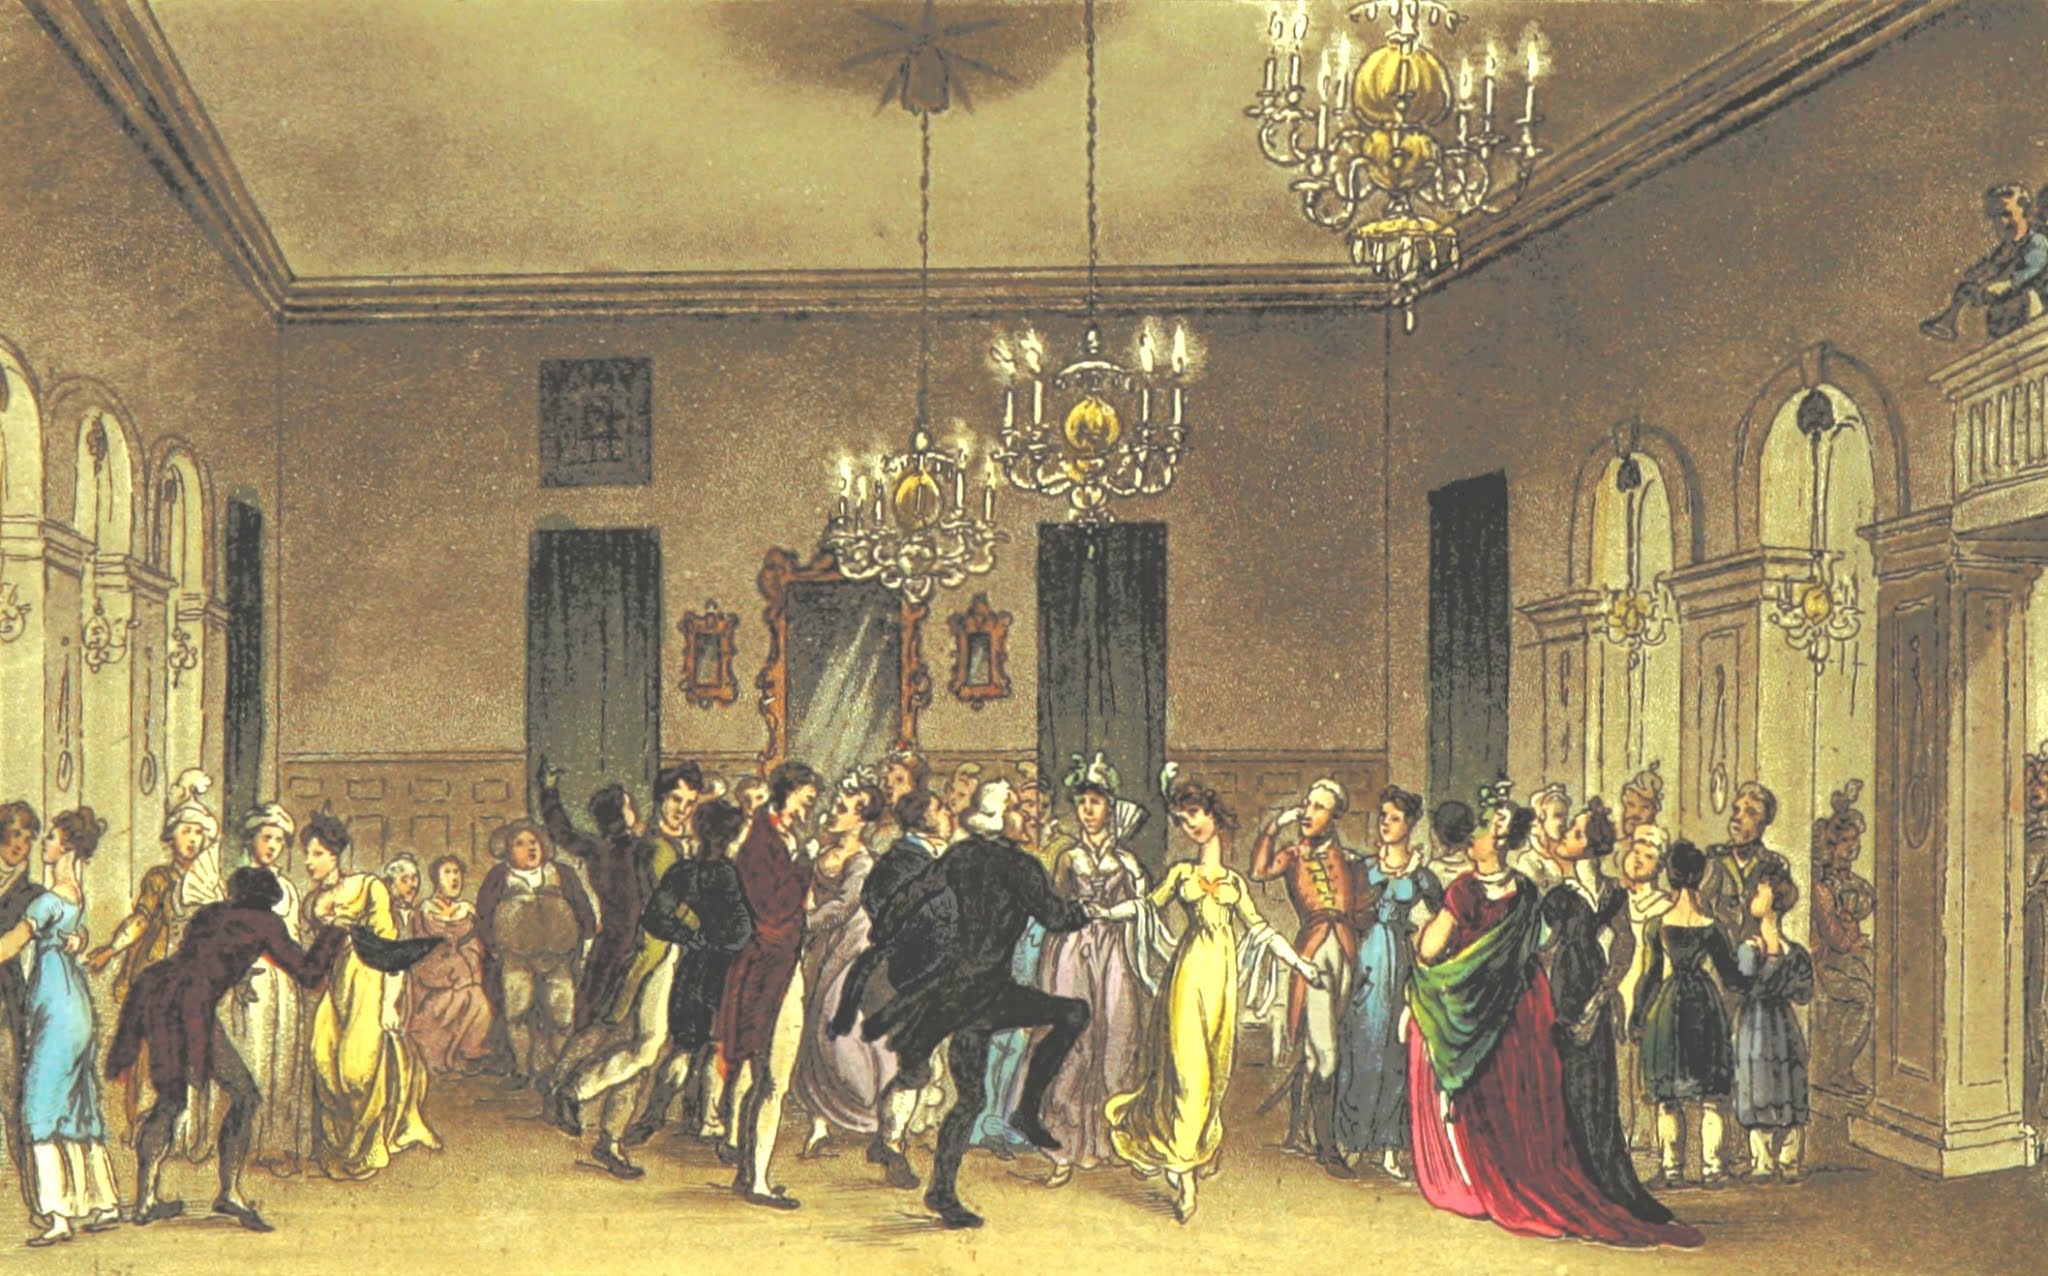 Regency History: How to behave in a Regency ballroom